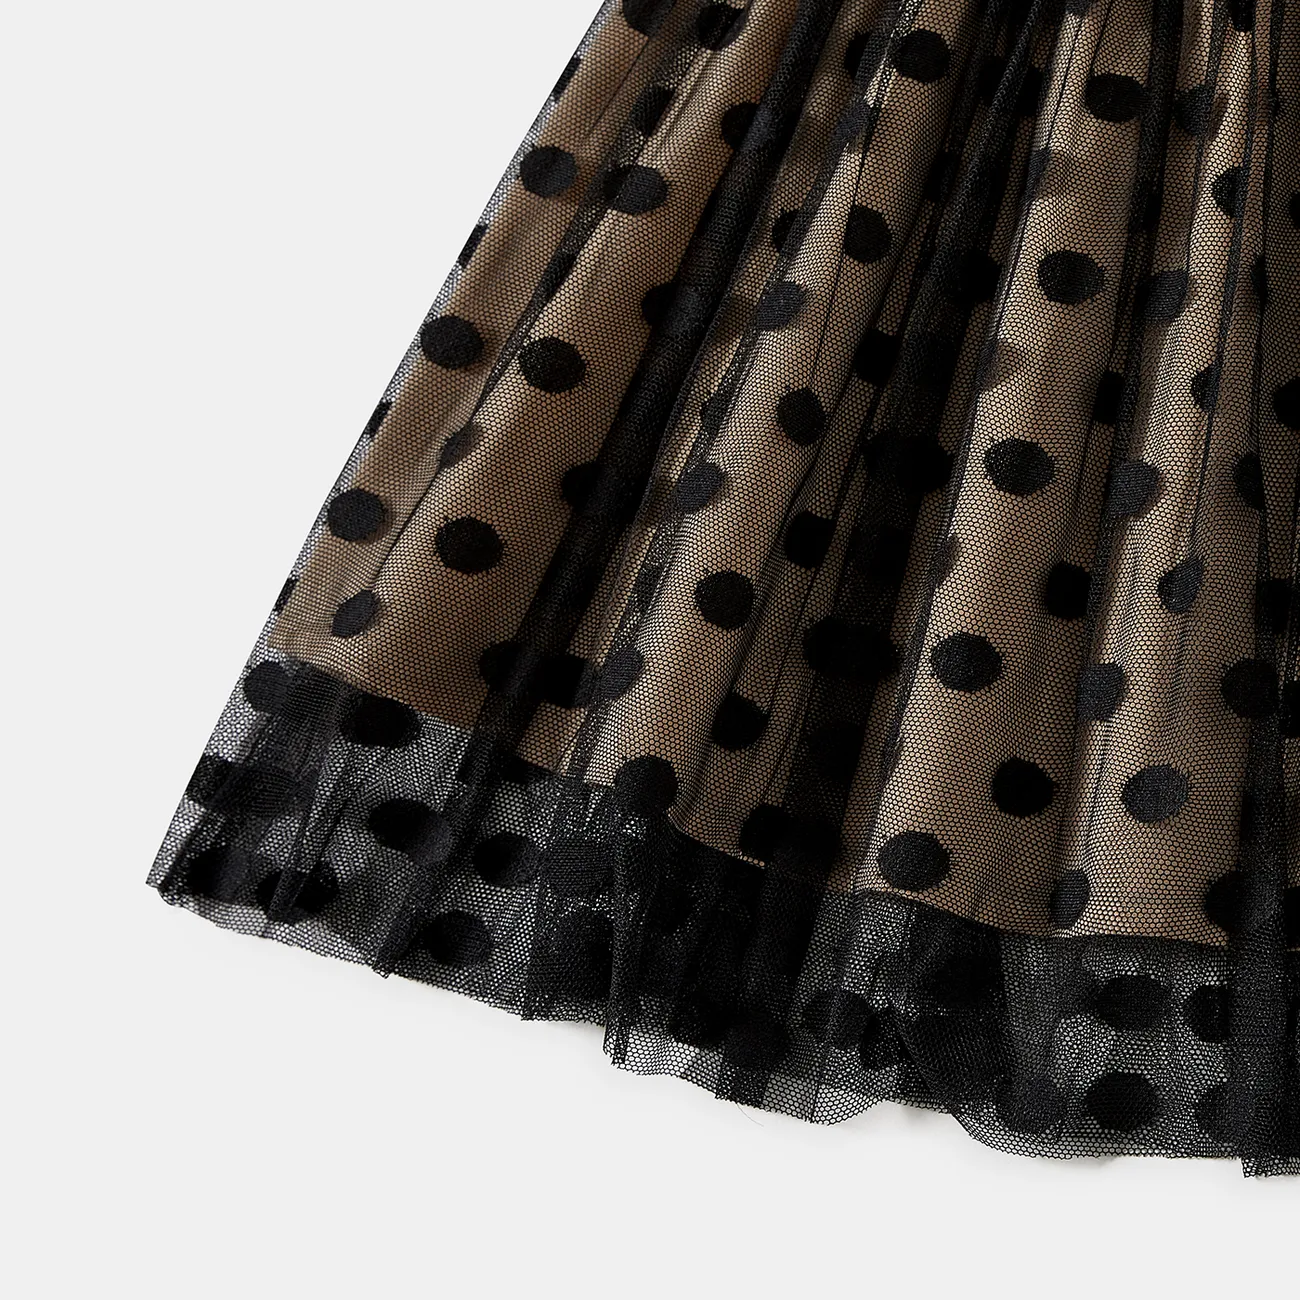 Family Matching Color-block Long-sleeve Tops and Polka dots Mesh Dresses Sets Black big image 1